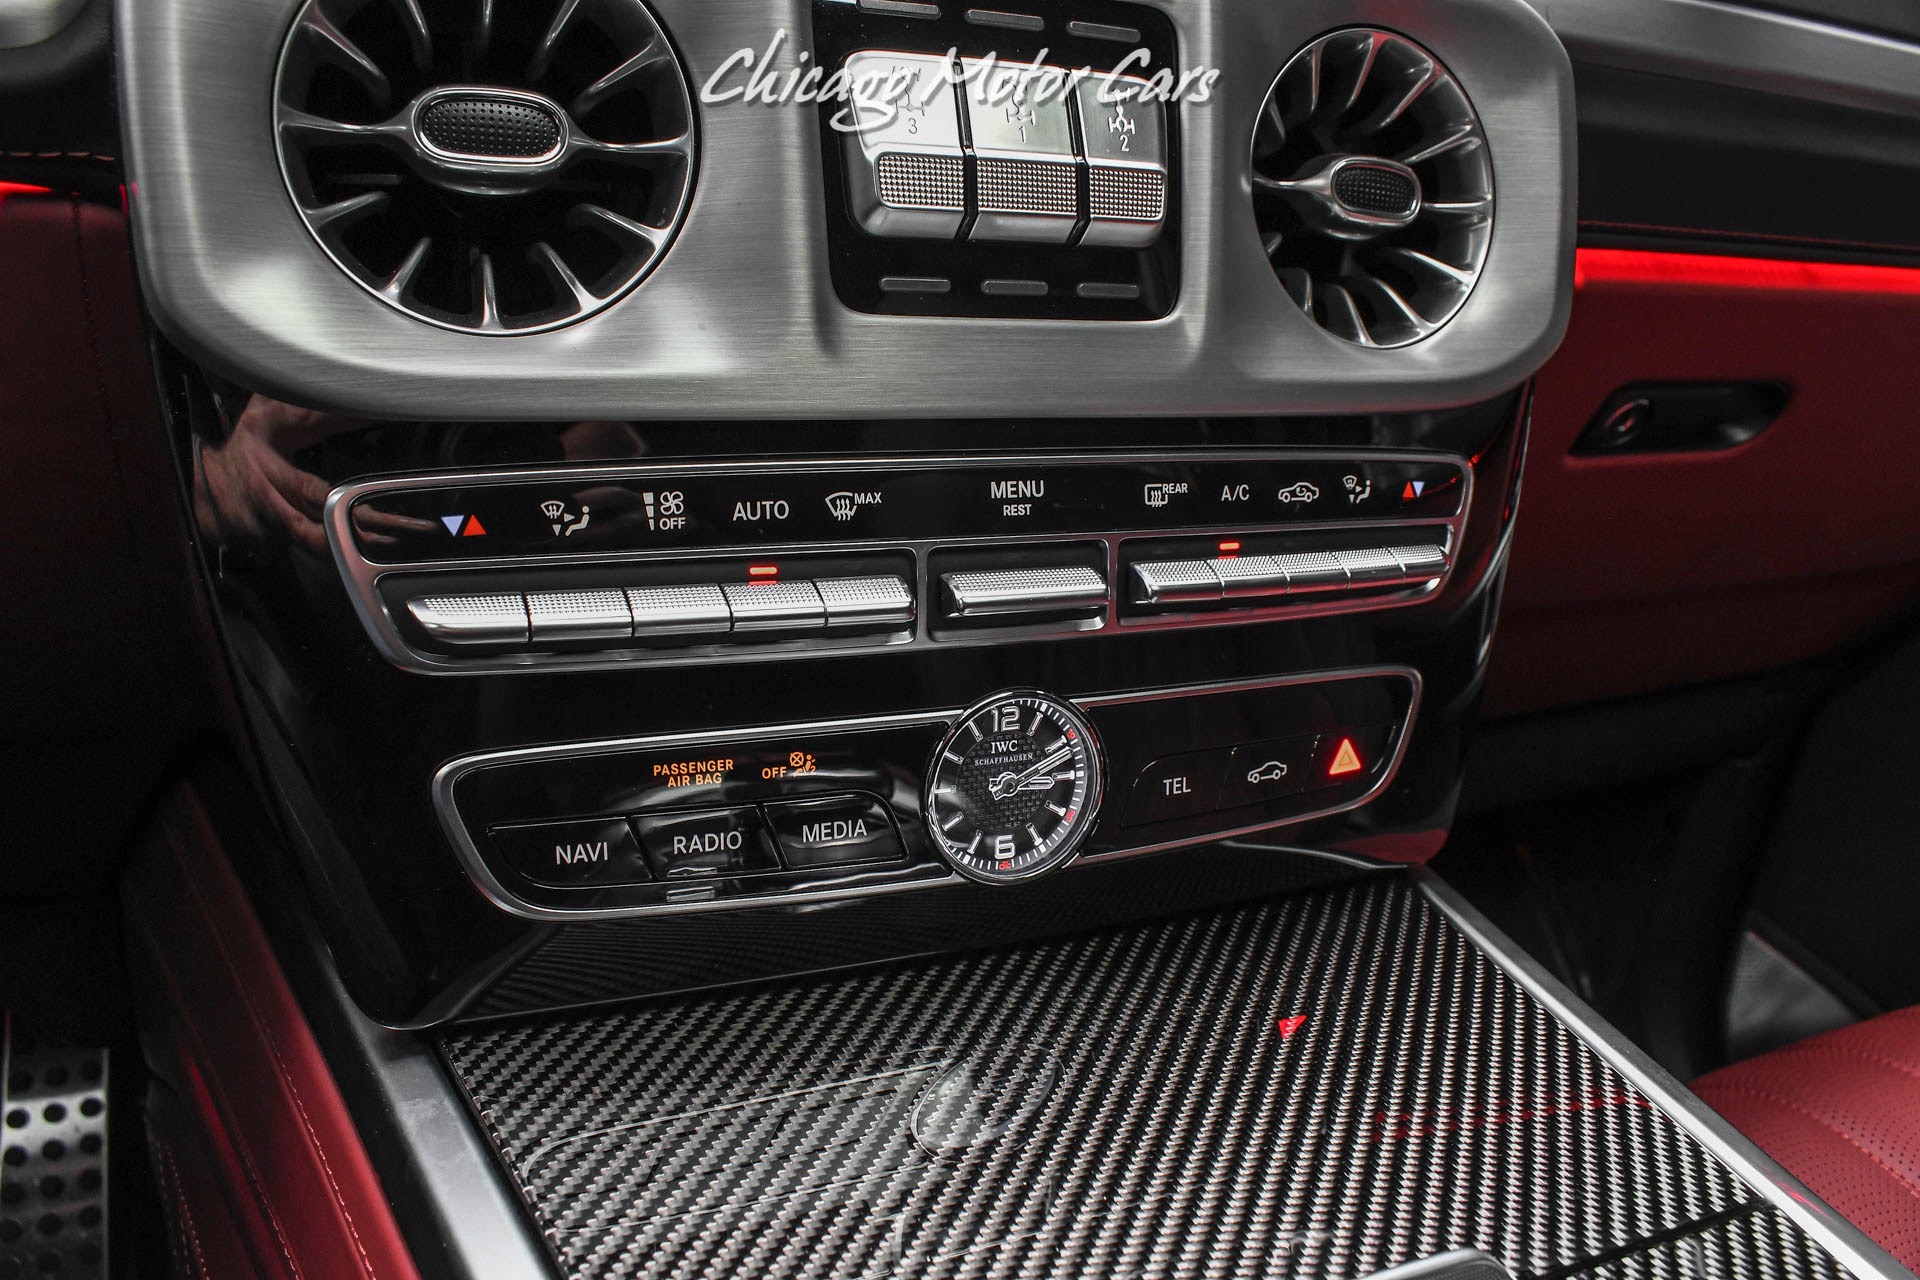 Used-2020-Mercedes-Benz-G63-AMG-G63-G-Manufaktur-Interior-Package-HOT-White-on-Red-Carbon-Fiber